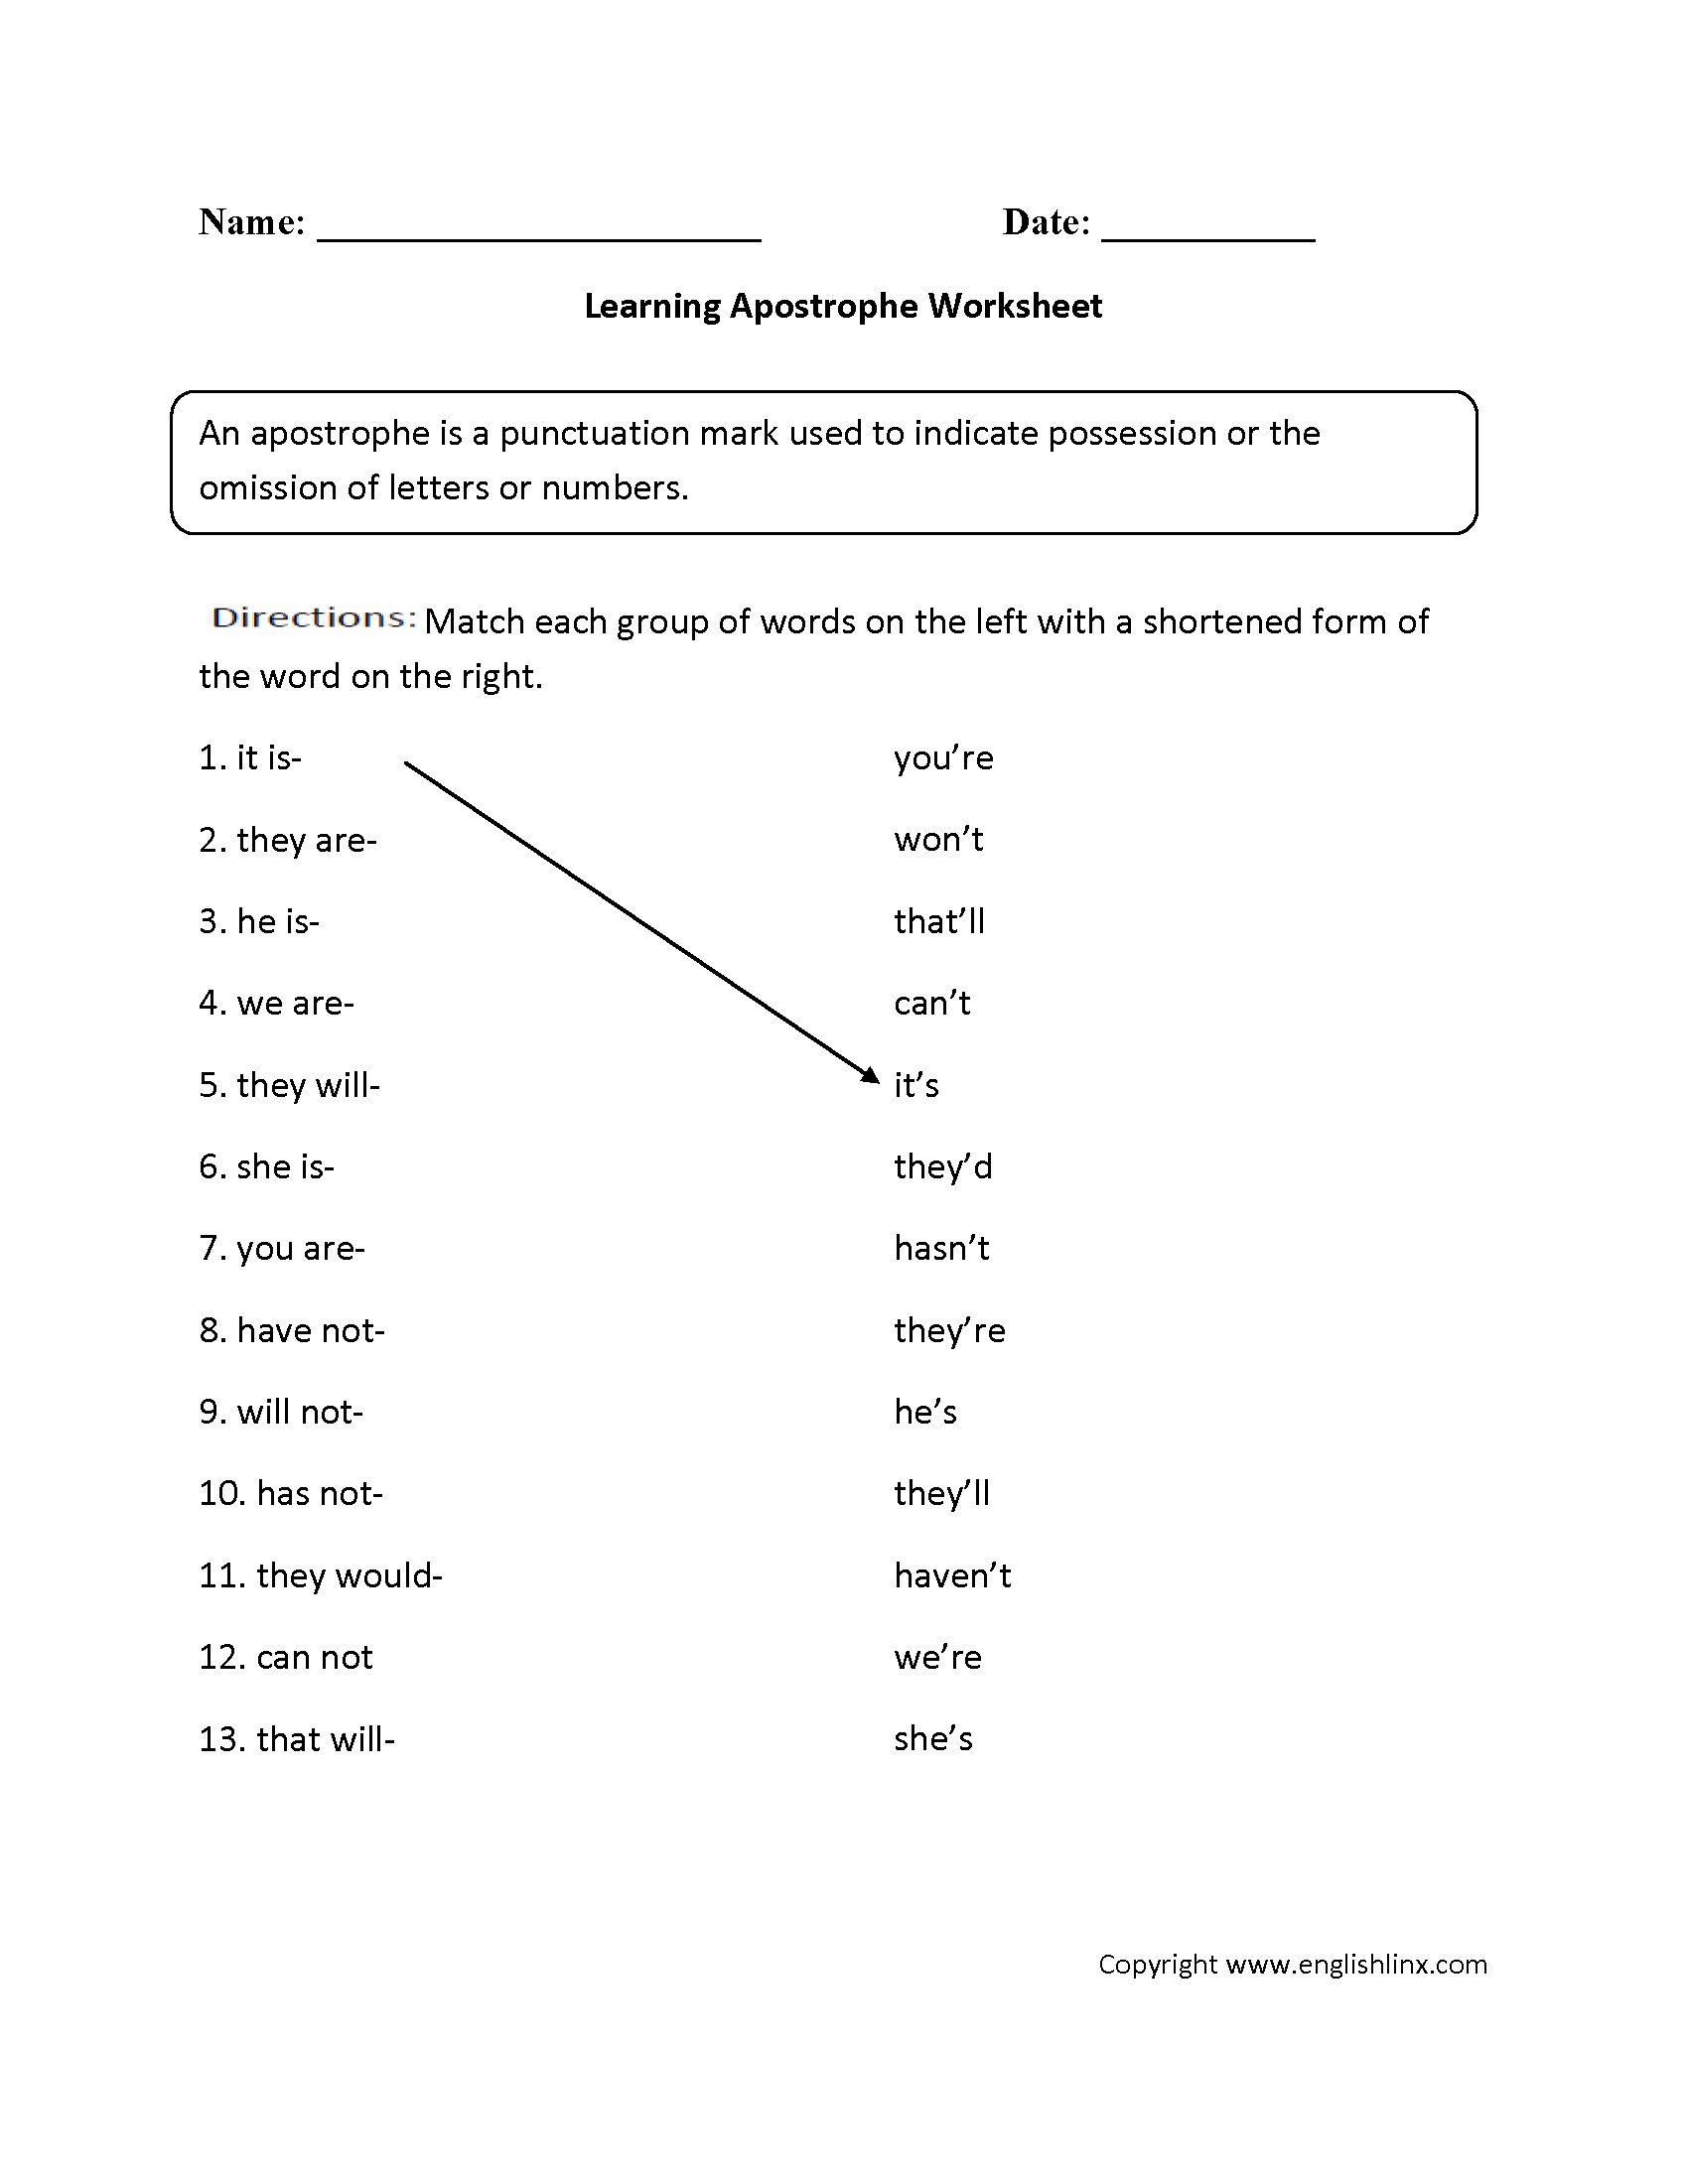 Grammar Worksheet On Hyphens And Dashes - Example Worksheet Solving